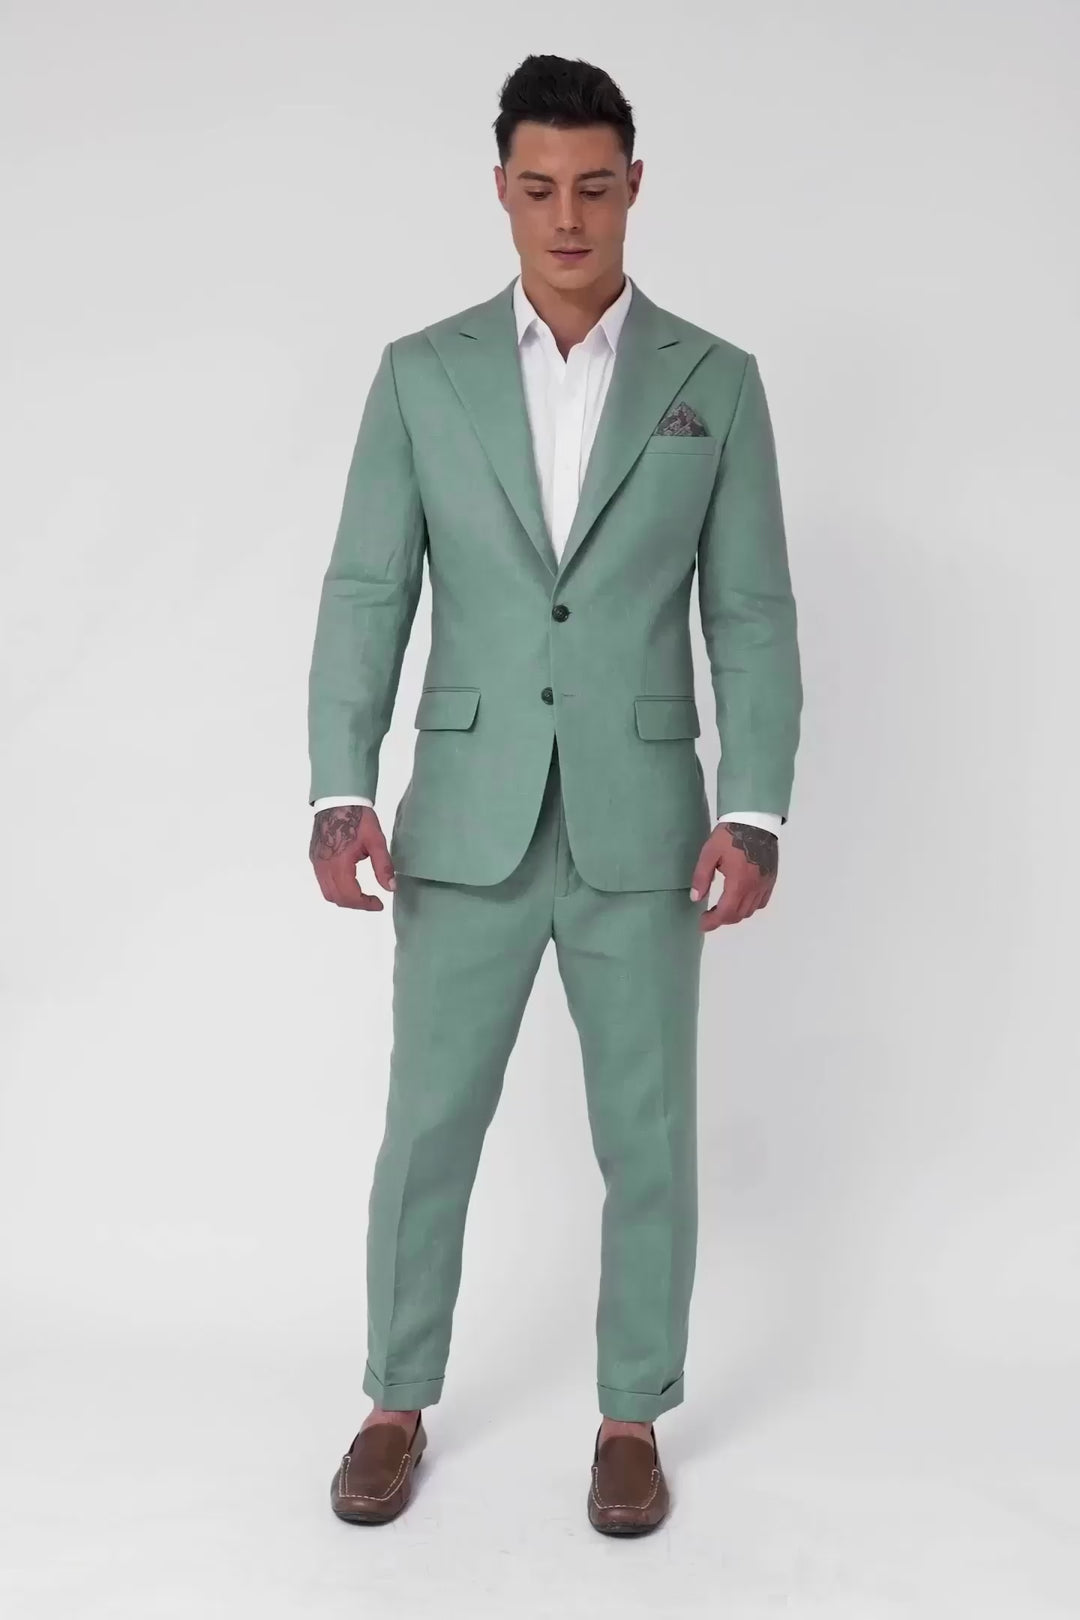 video of model wearing the Jade Green linen suit posing in different ways